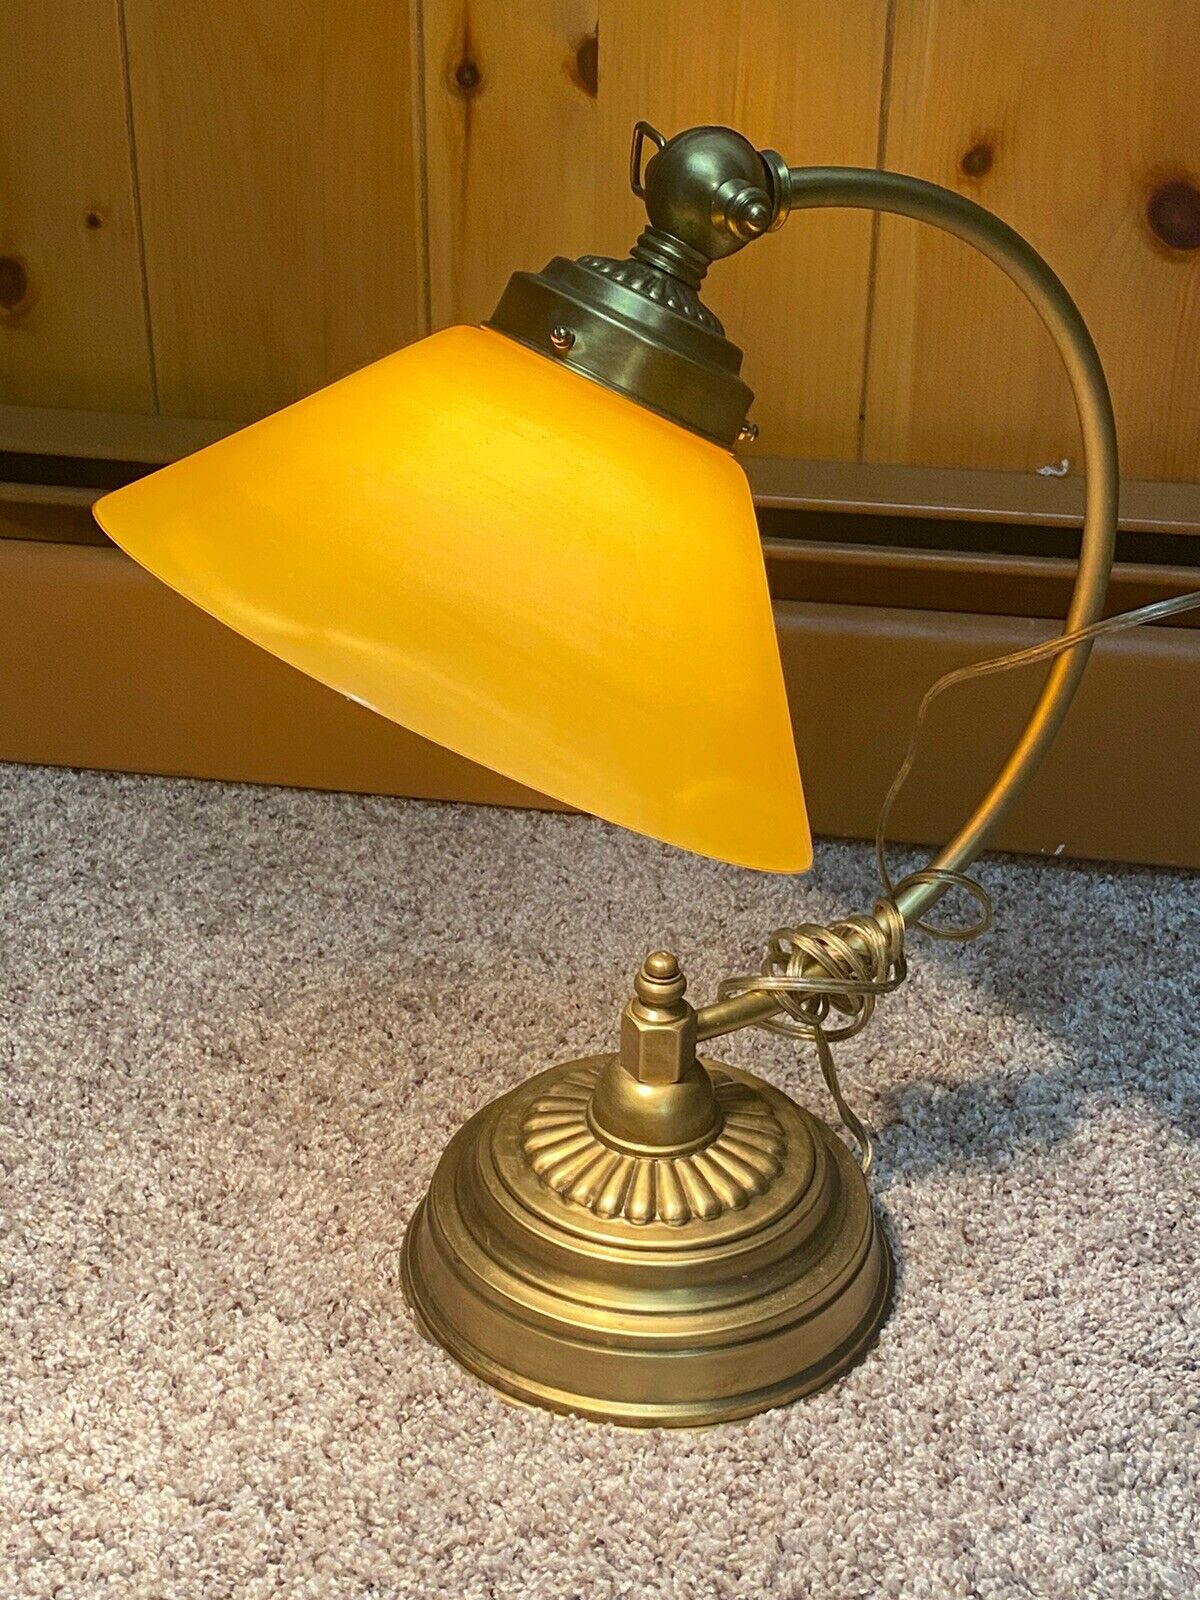 ANTIQUE BROWNISH ORANGE PORTABLE LAMP, TSENG MEI ENTER, TM810 DESK LAMP